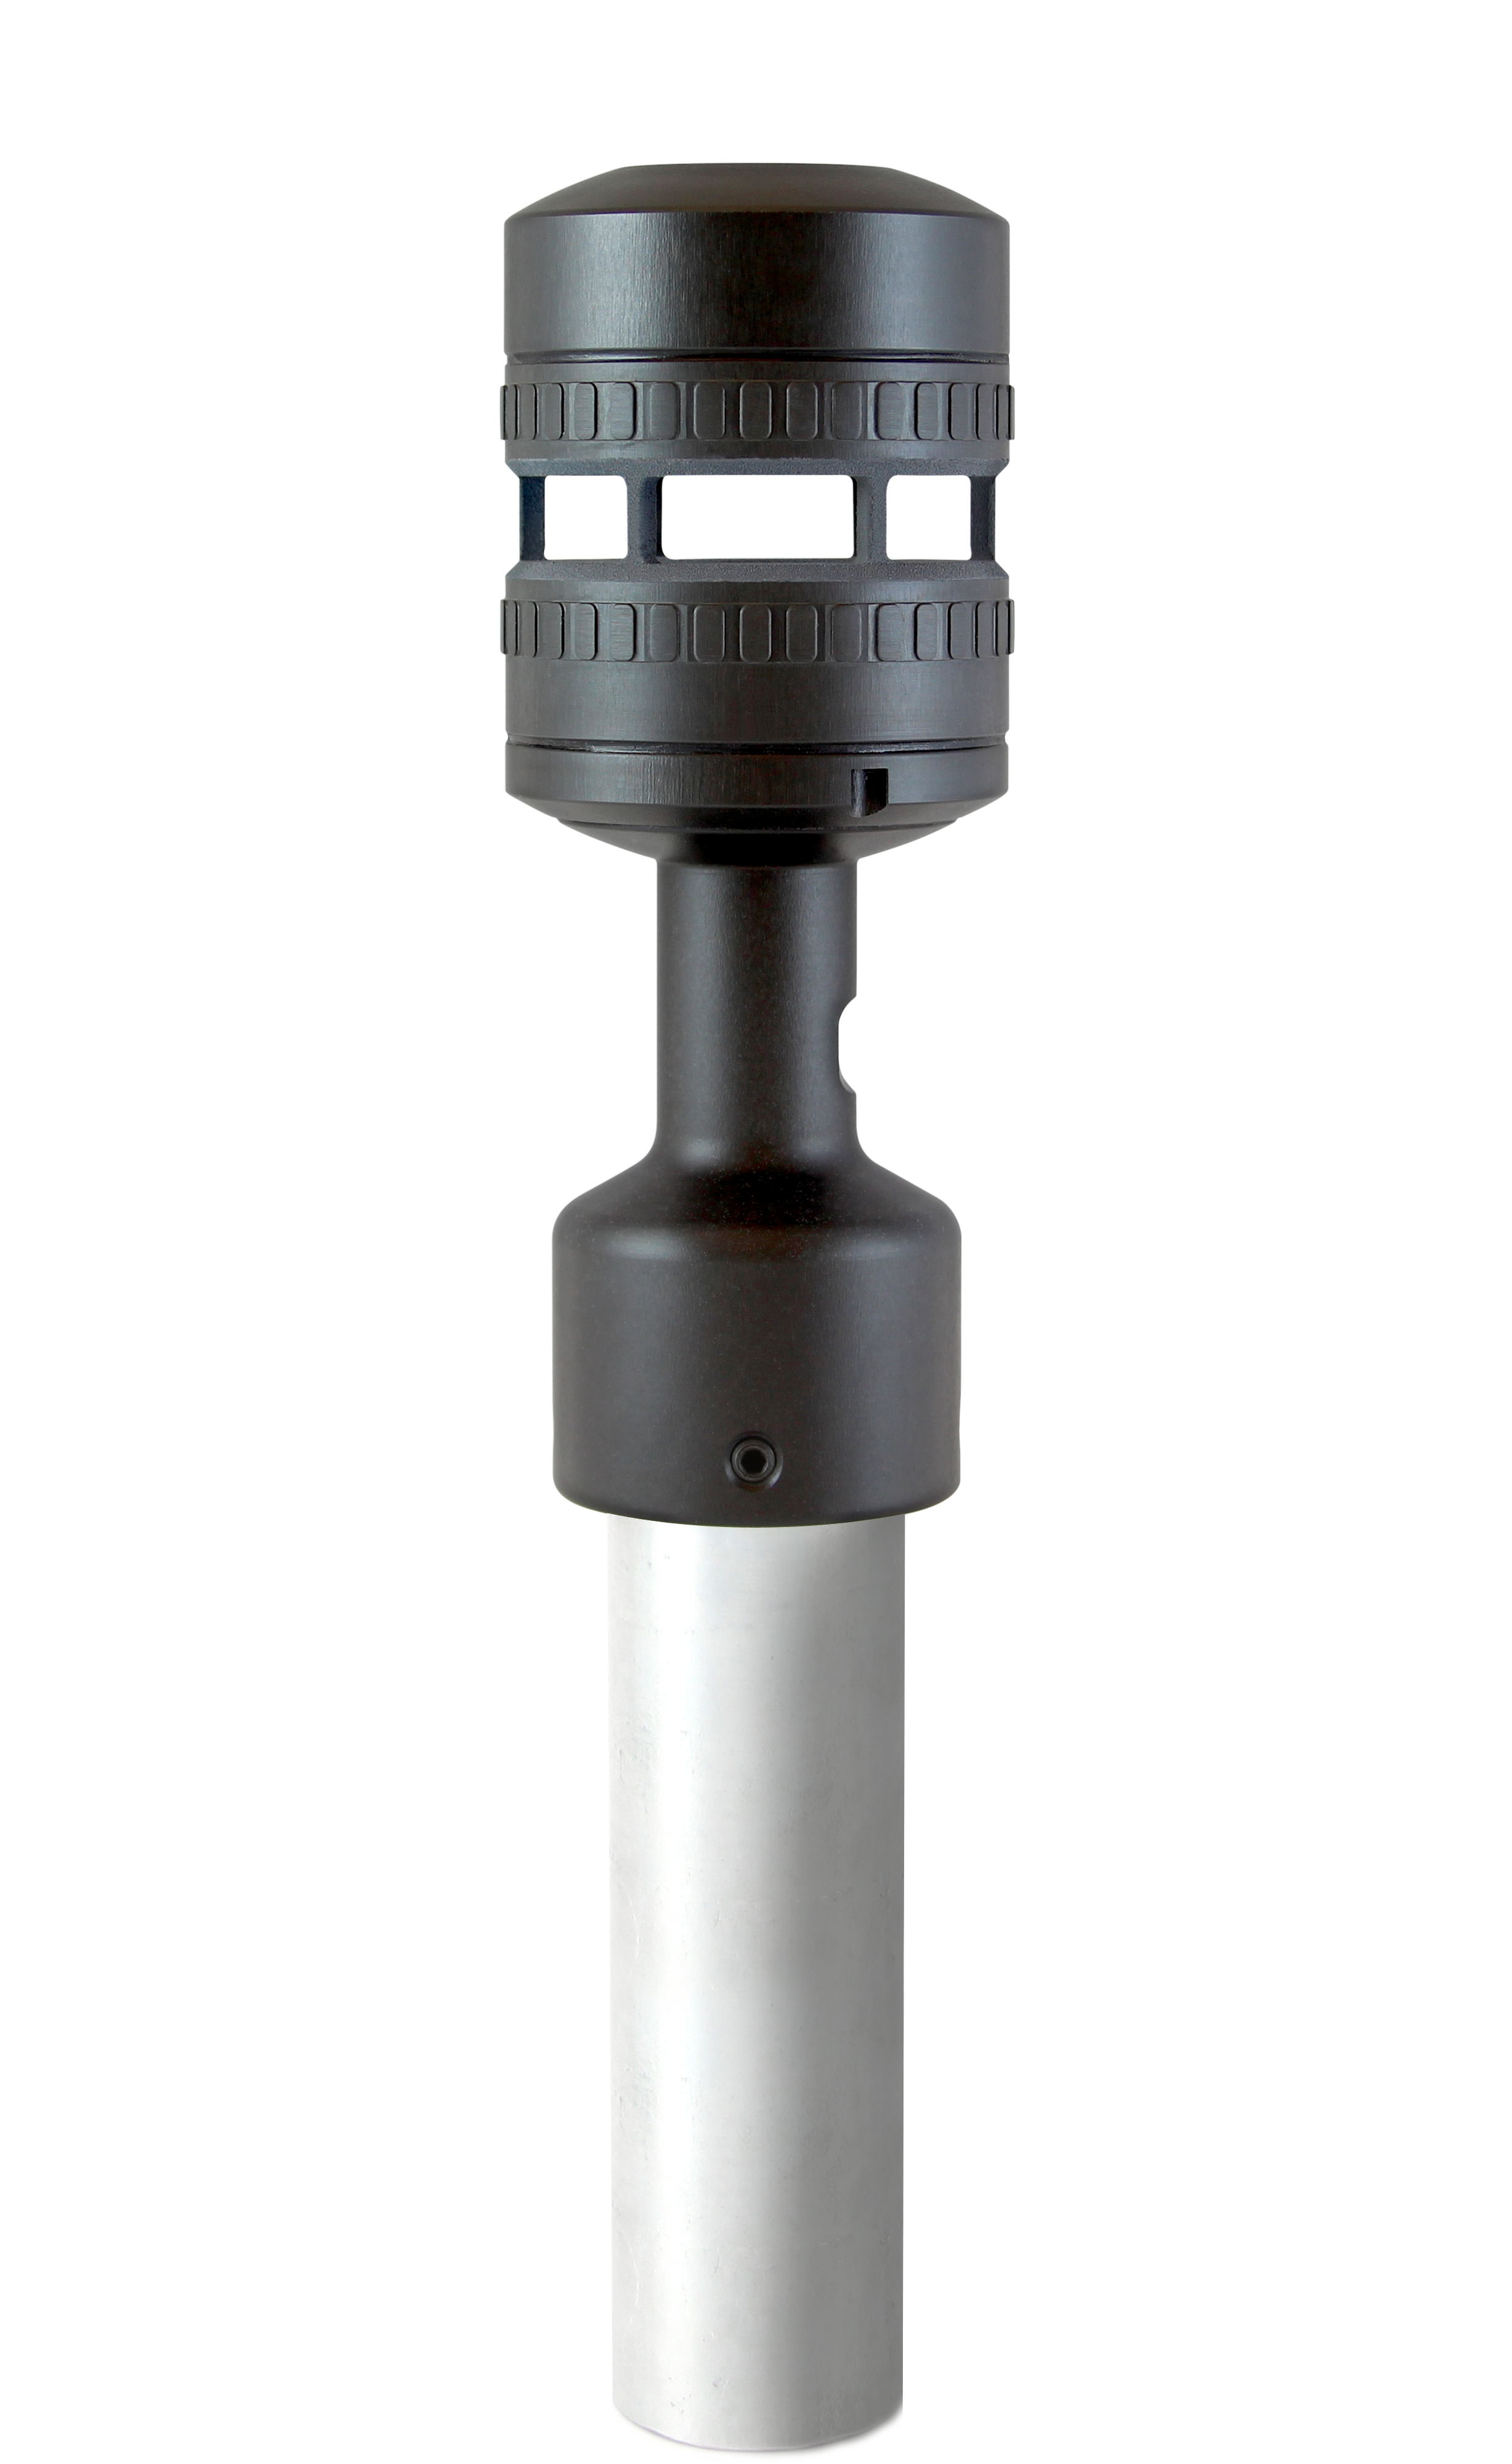 FT742-DM ultrasonic wind sensor on pipe